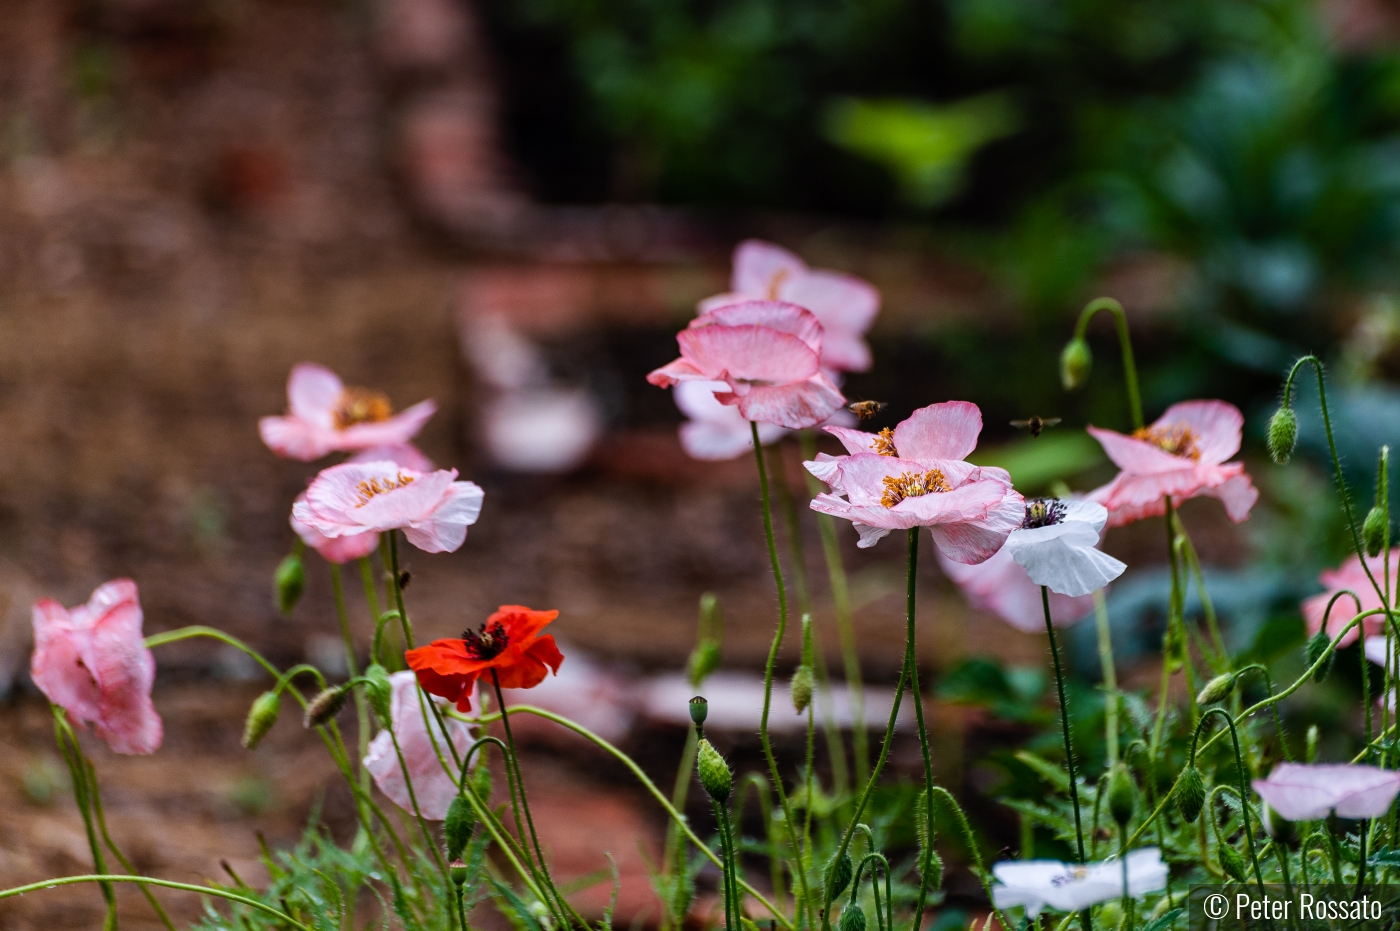 Garden Poppies by Peter Rossato